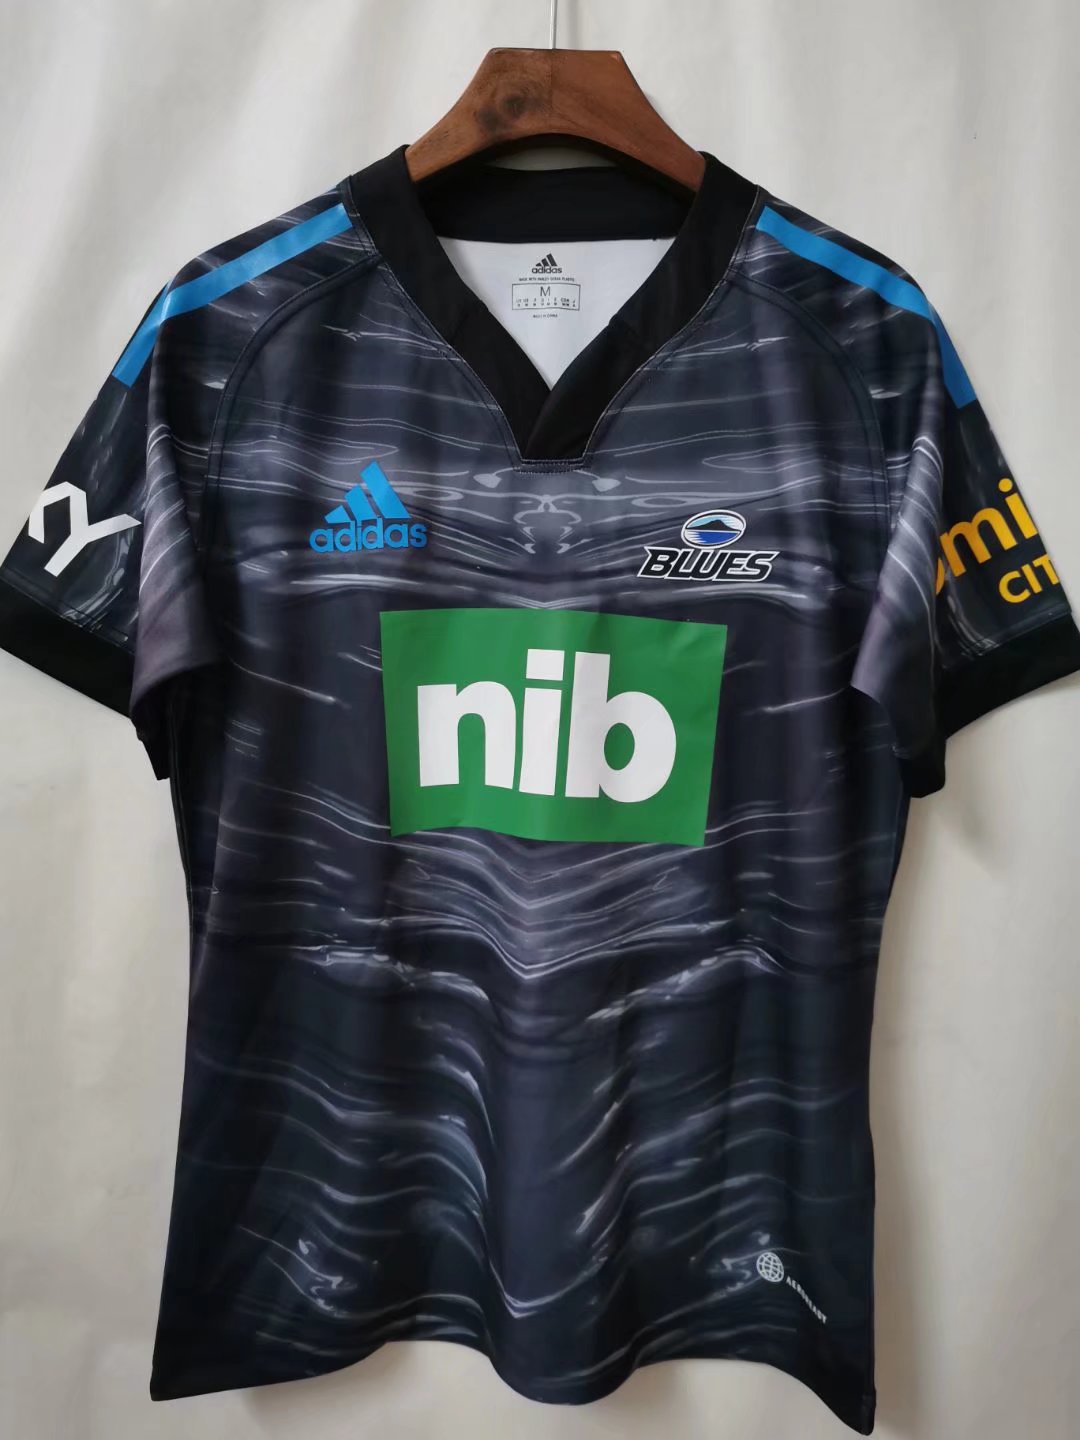 2022 Blues Black & Gray Thailand Rugby Shirts-805